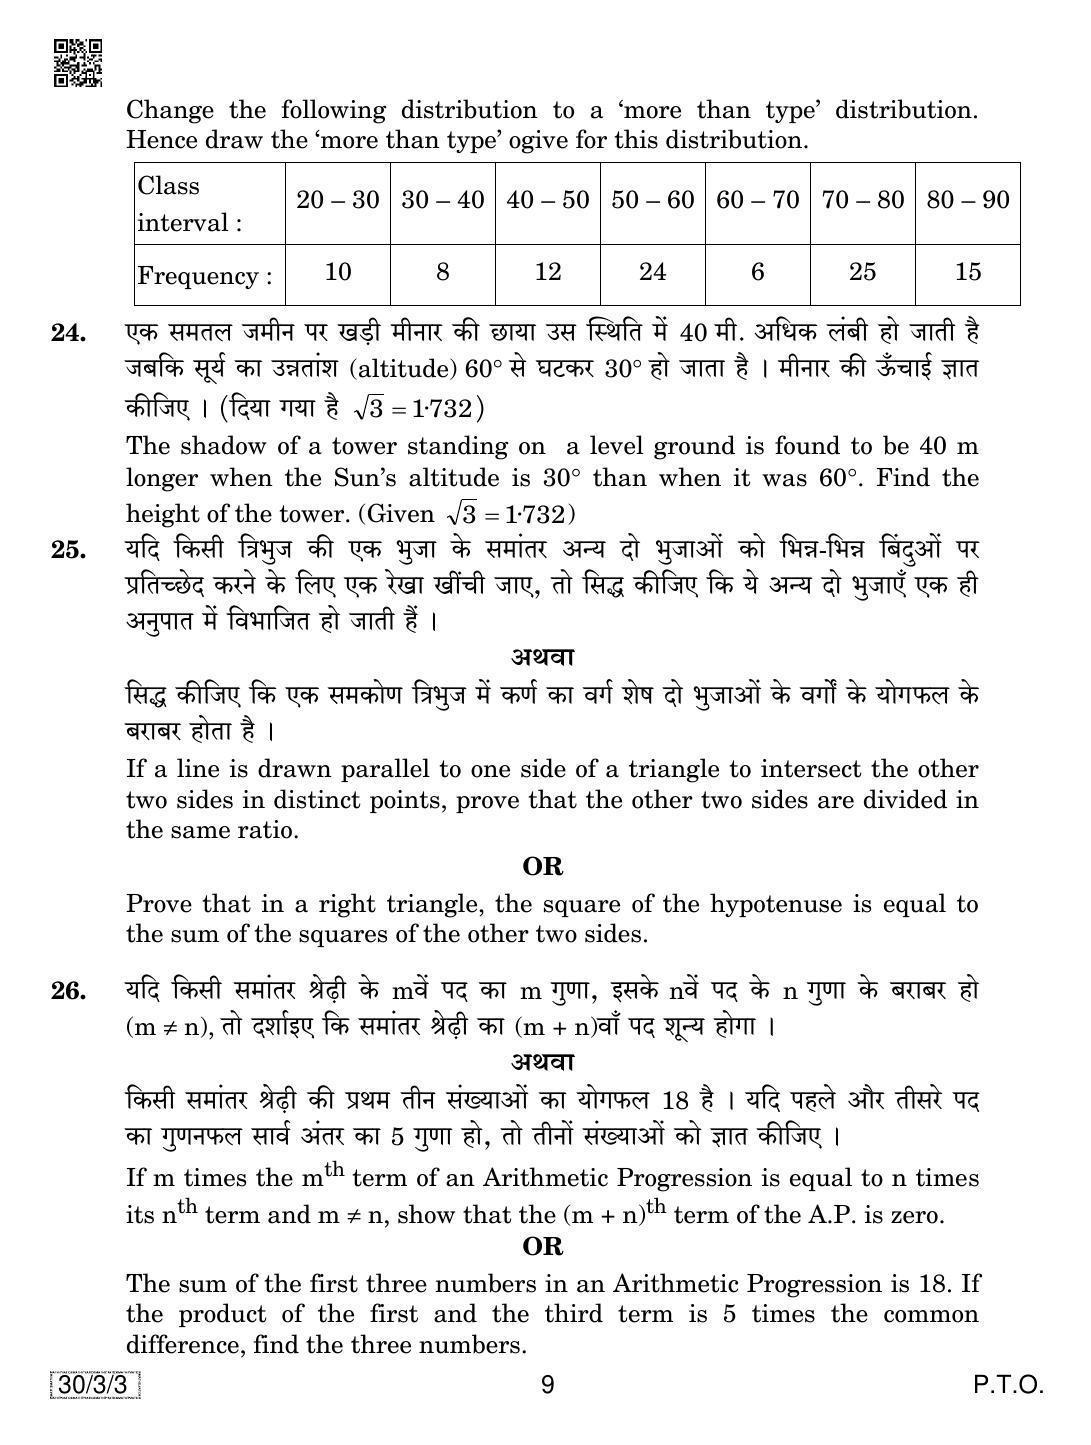 CBSE Class 10 Maths (30/3/3 - SET 3) 2019 Question Paper - Page 9